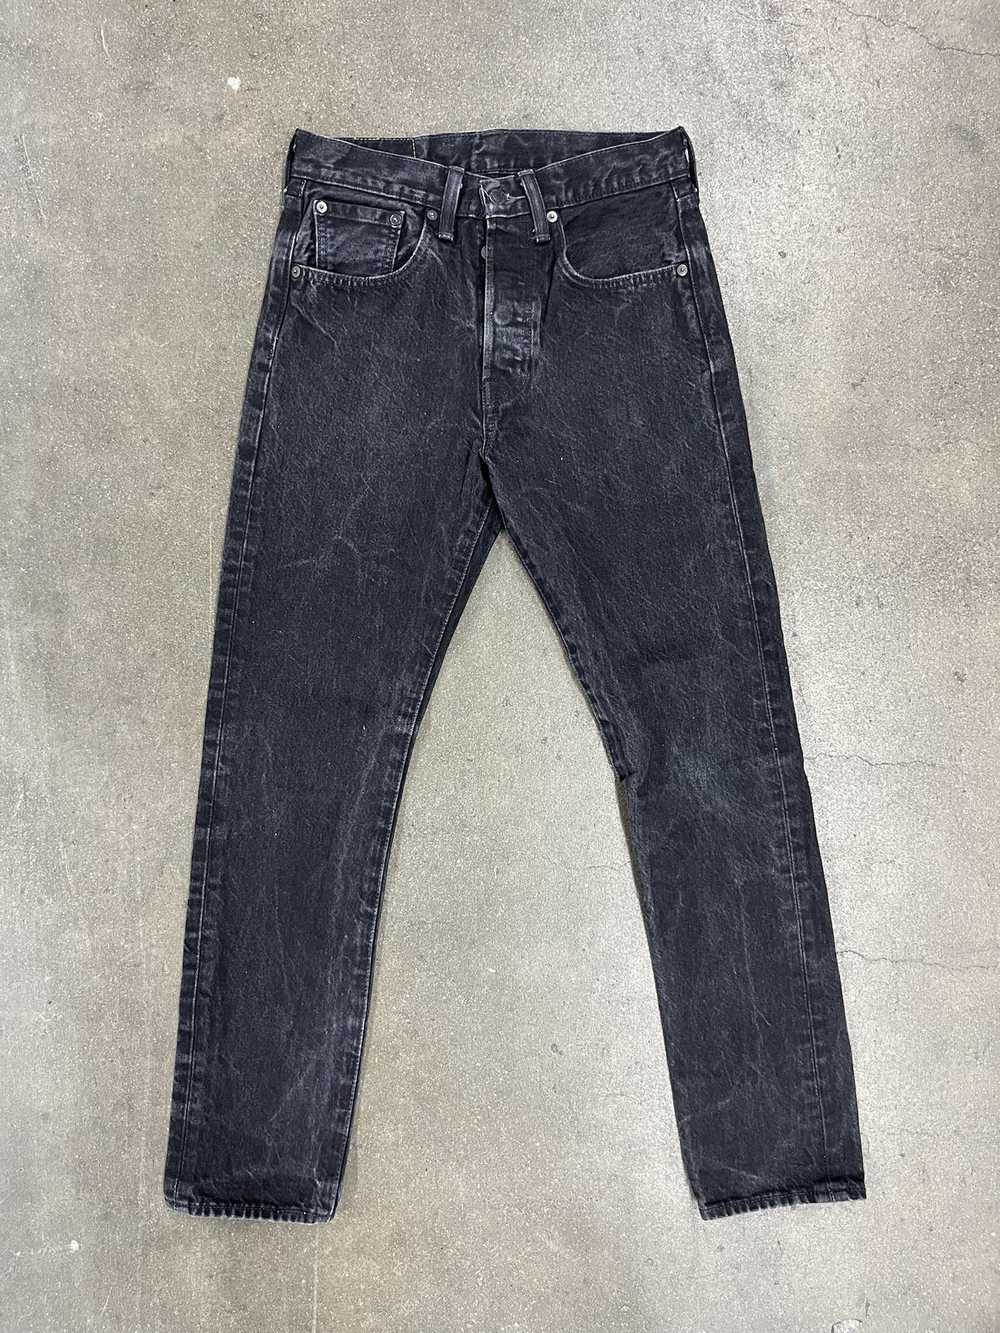 Streetwear × Vintage Levis 501 29 x 32 Black Jeans - image 1